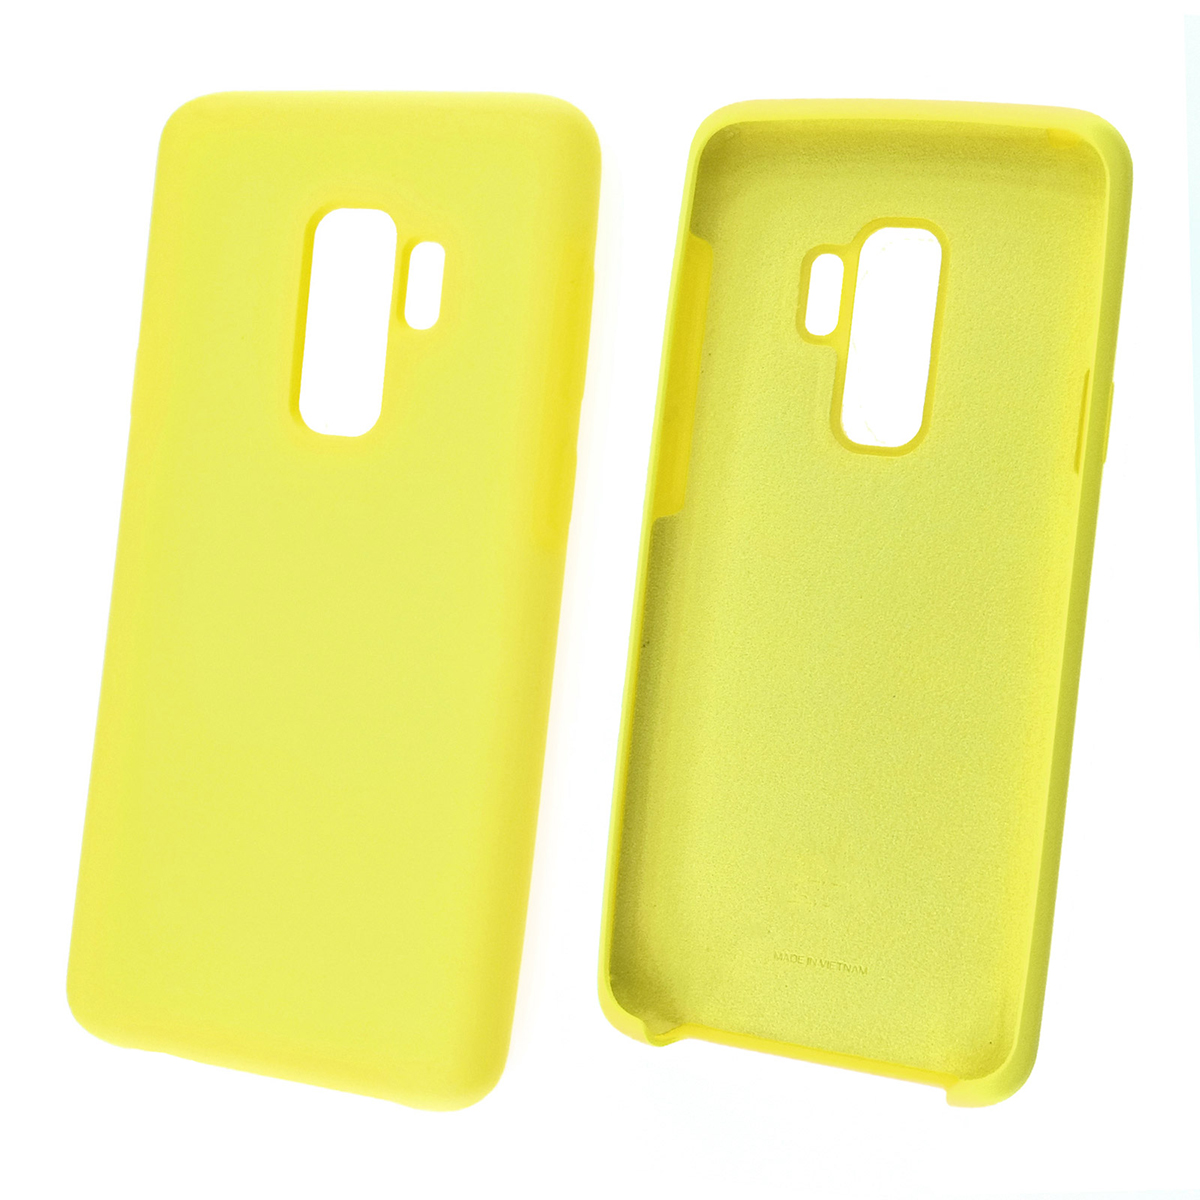 Чехол накладка Silicon Cover для SAMSUNG Galaxy S9 Plus (SM-G965), силикон, бархат, цвет ярко желтый.